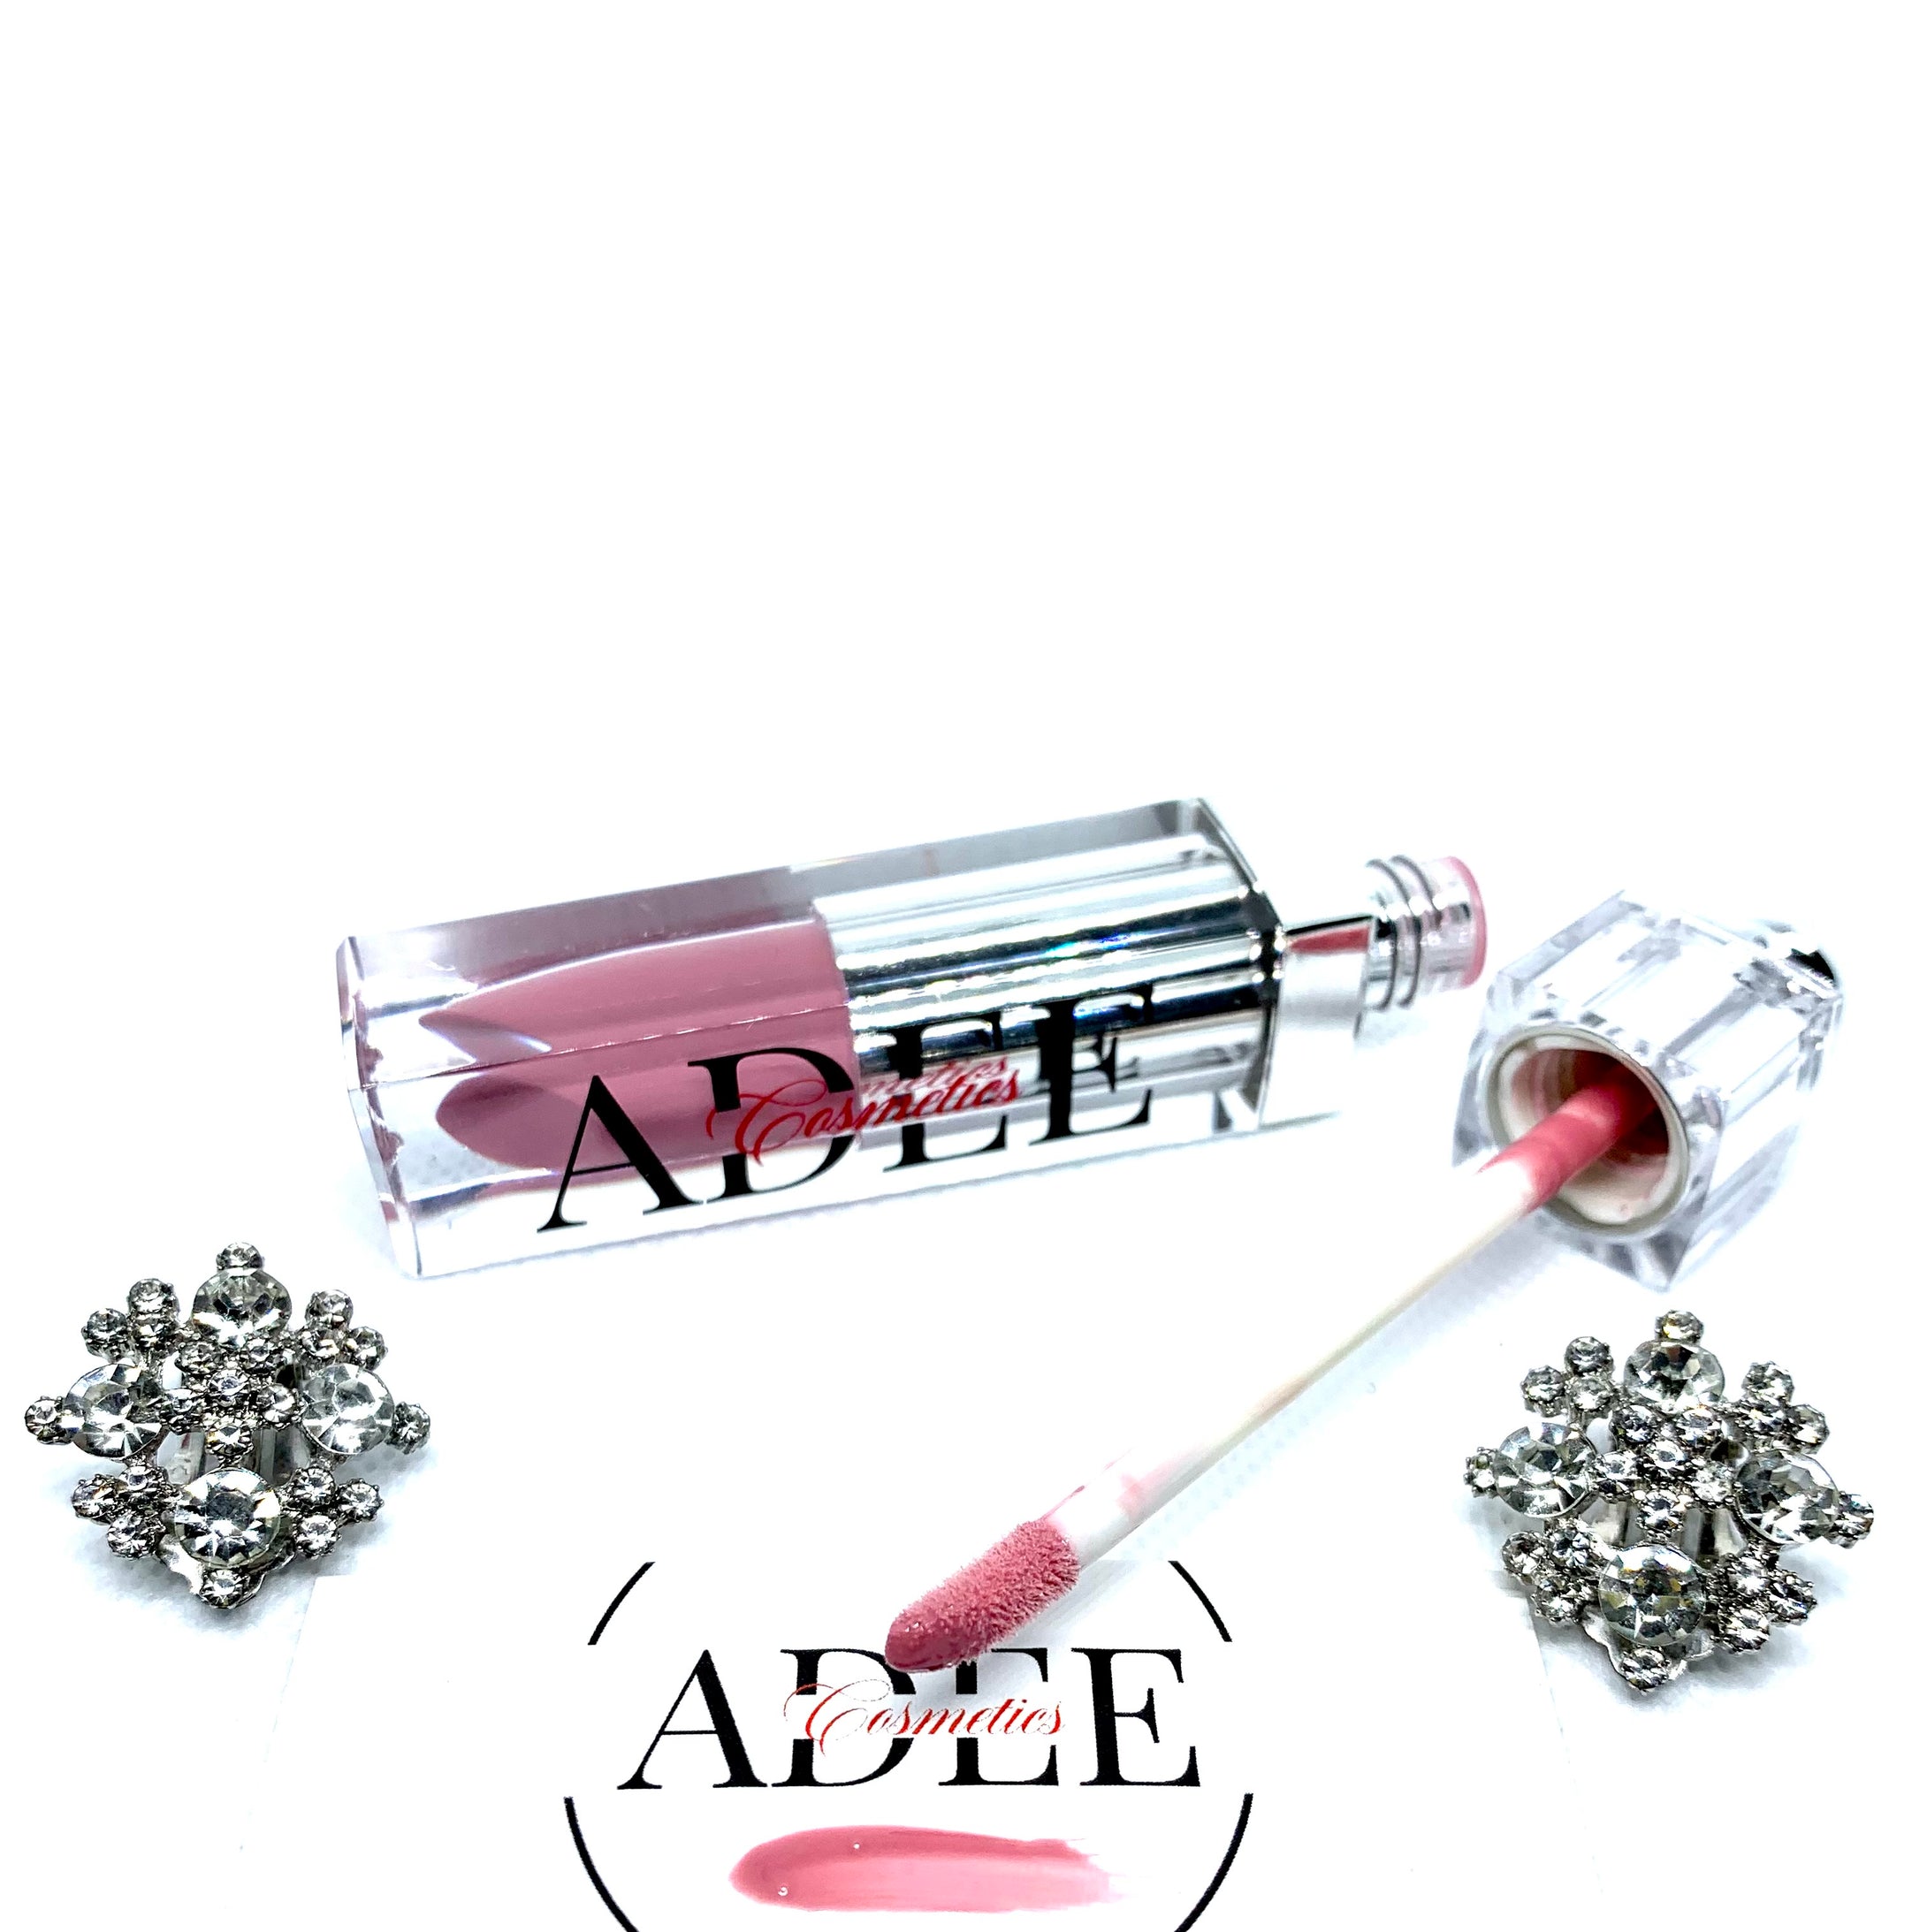 Vegan Matte Lipstick - Adee Cosmetics, Vegan Lip gloss, Cruelty Free Matte Lipstick, Cruelty Free Lip gloss Lipstick, Adee Cosmetics